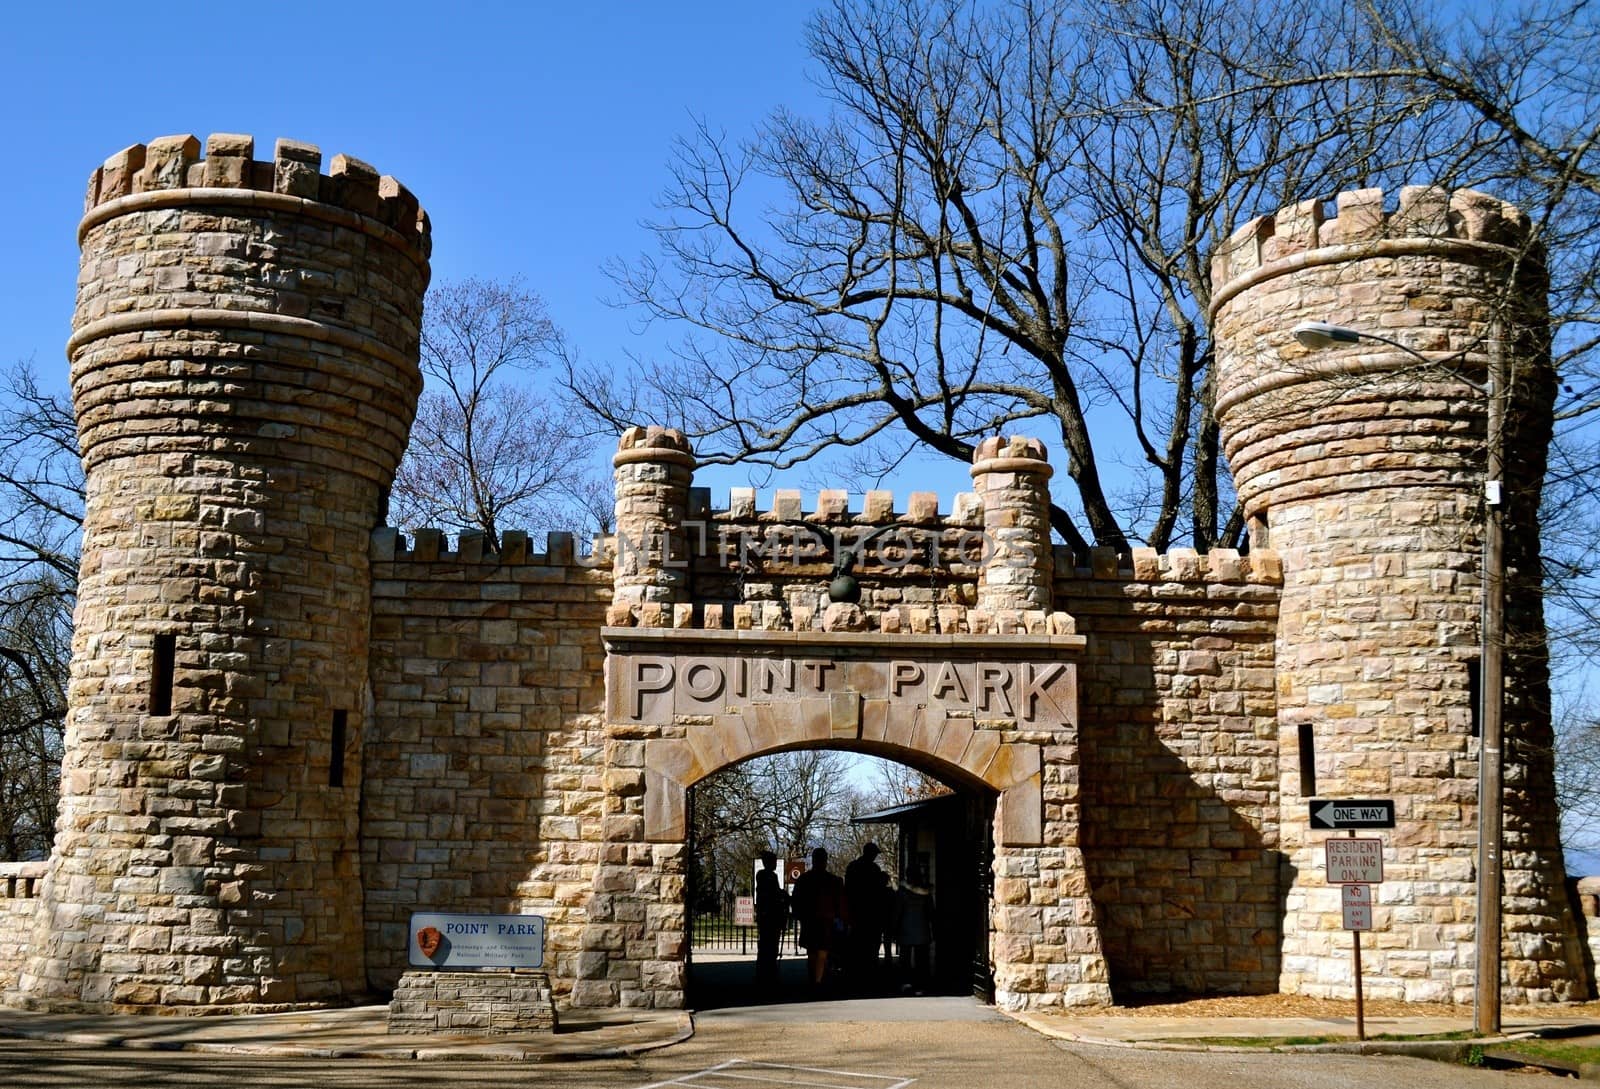 Point Park Entrance by RefocusPhoto